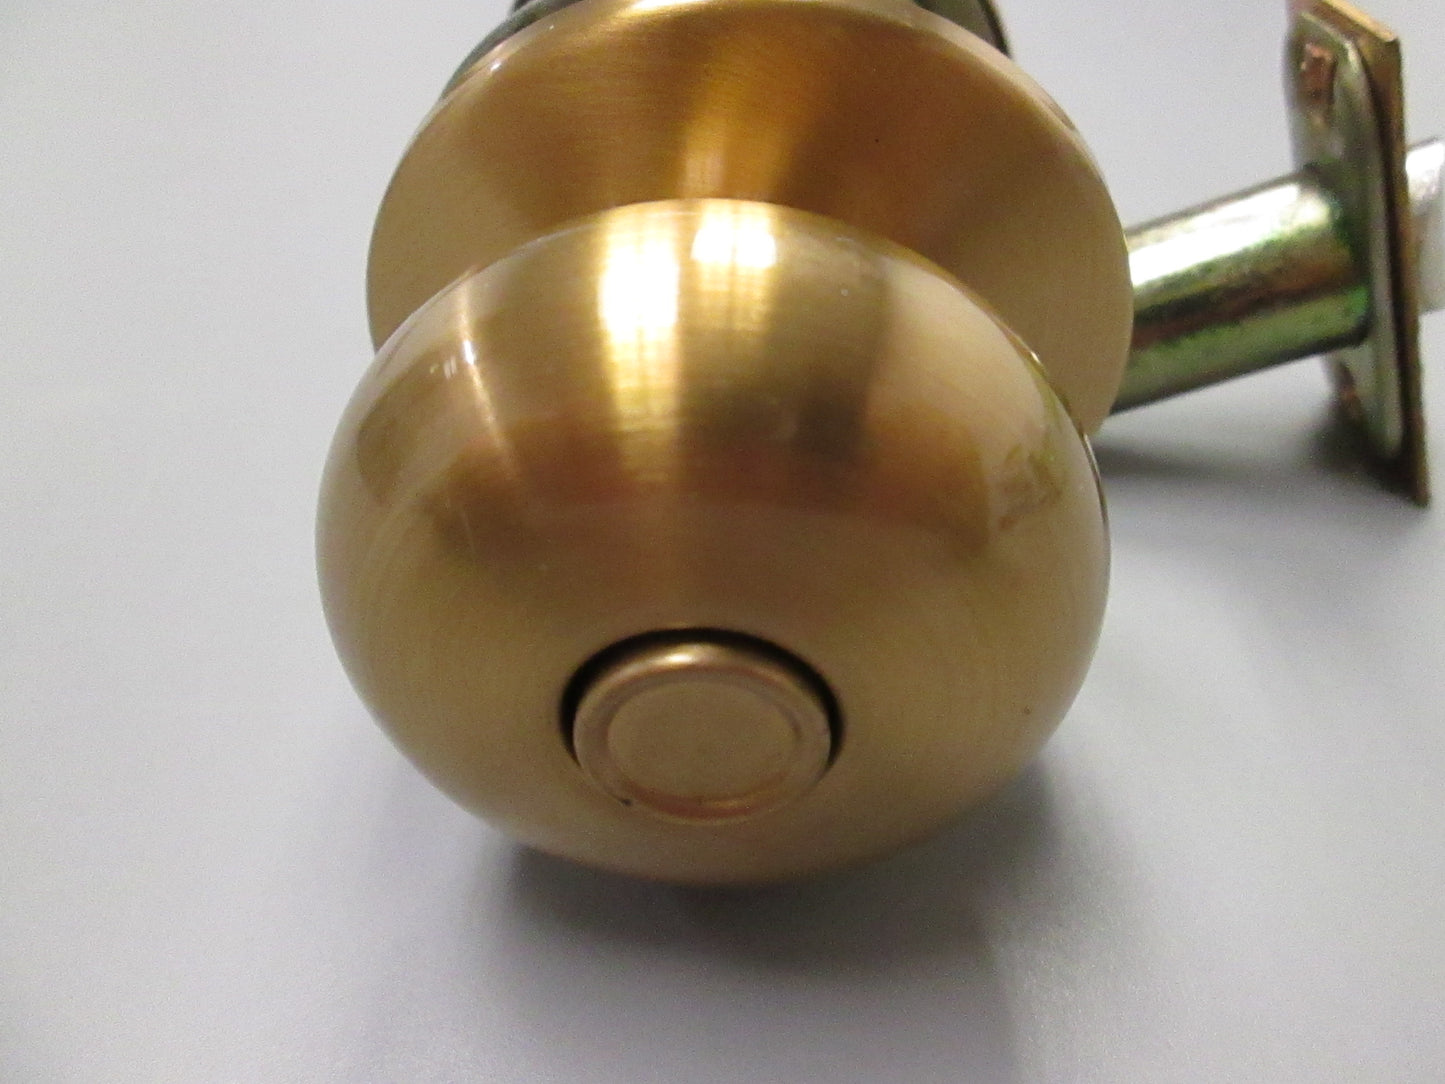 Arrow M02TA Cylindrical Privacy Set with Tudor Style Knobs Satin Bronze